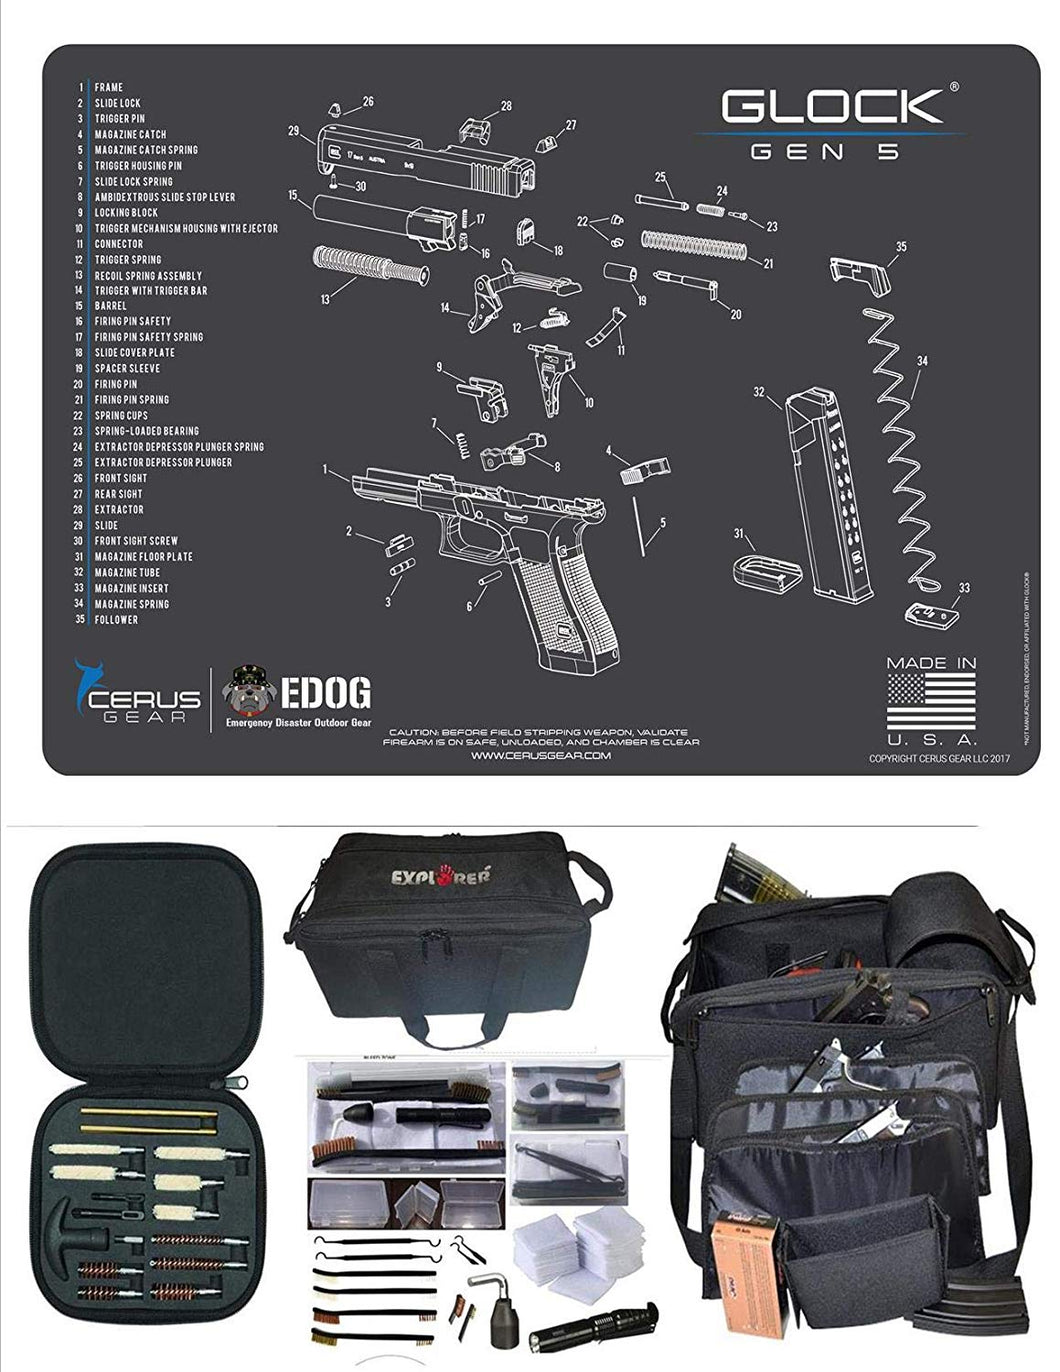 EDOG Glock Gen 5 Cerus Exploded View Schematic Gun Cleaning Mat & R5 H –  EDOG USA